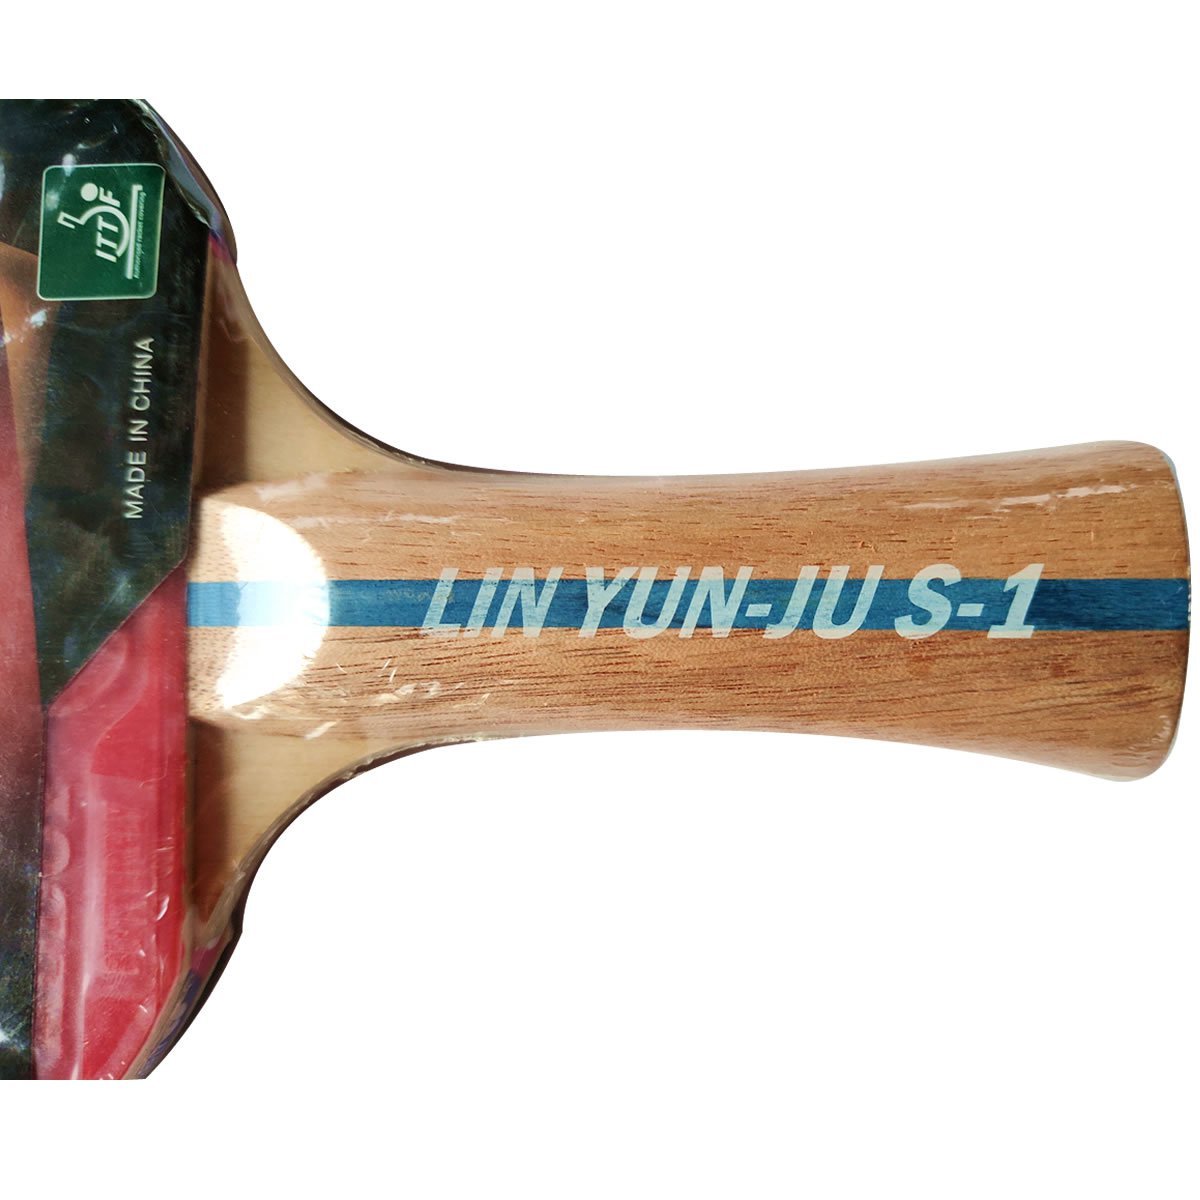 Raquete Tênis de mesa Clássica Butterfly Lin Yun-ju S1 - 4